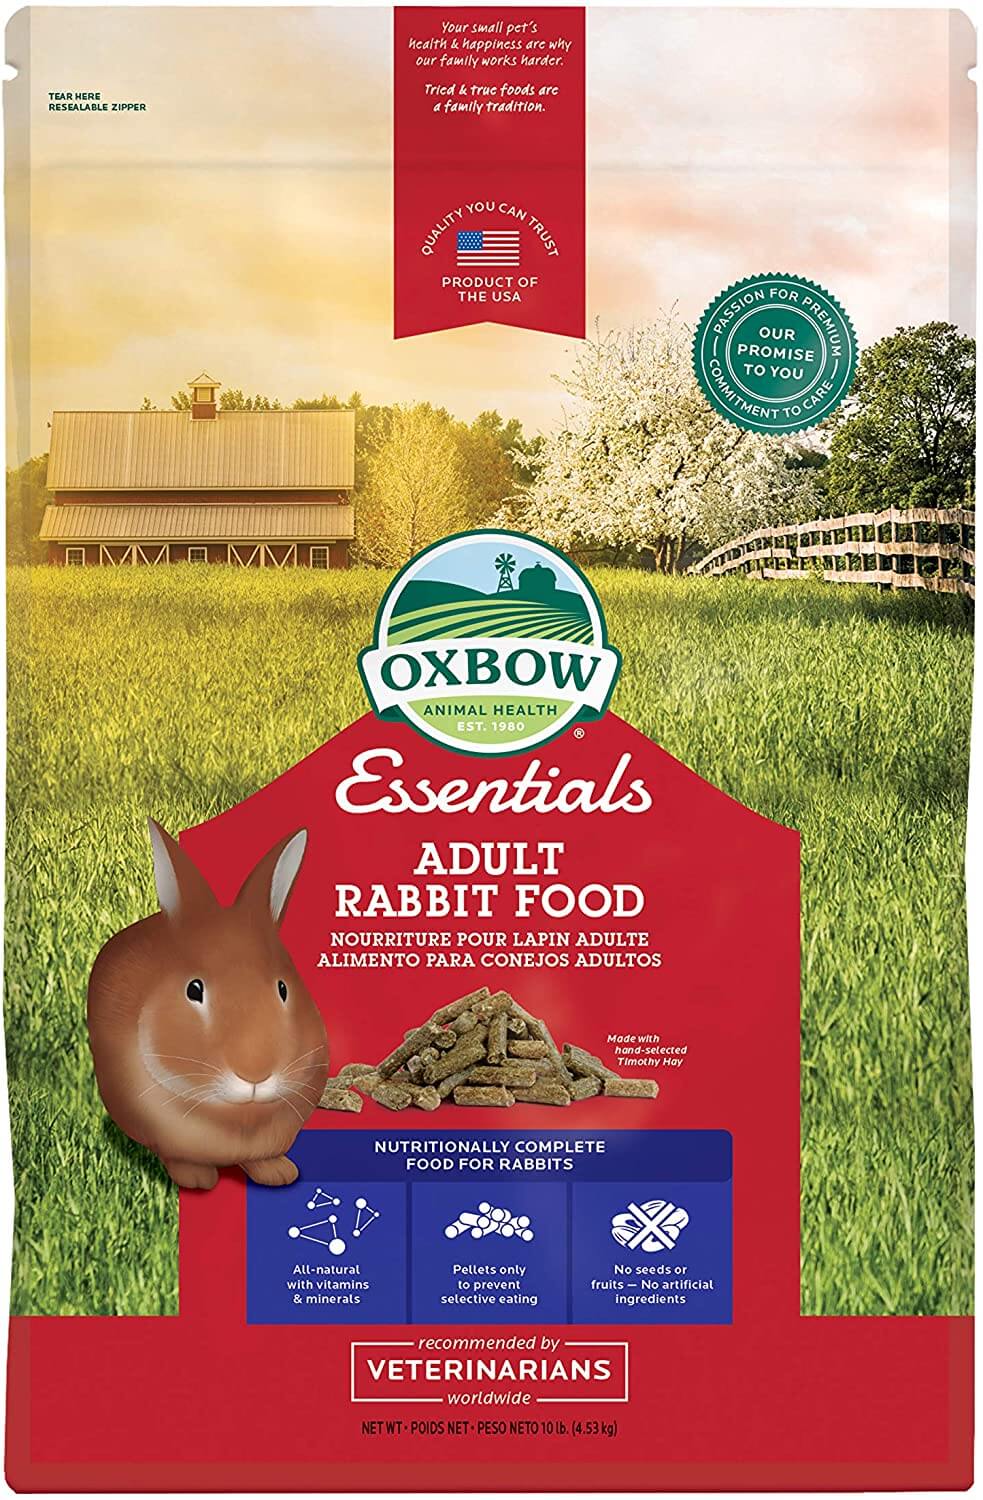 Image of Oxbow rabbit pellets.